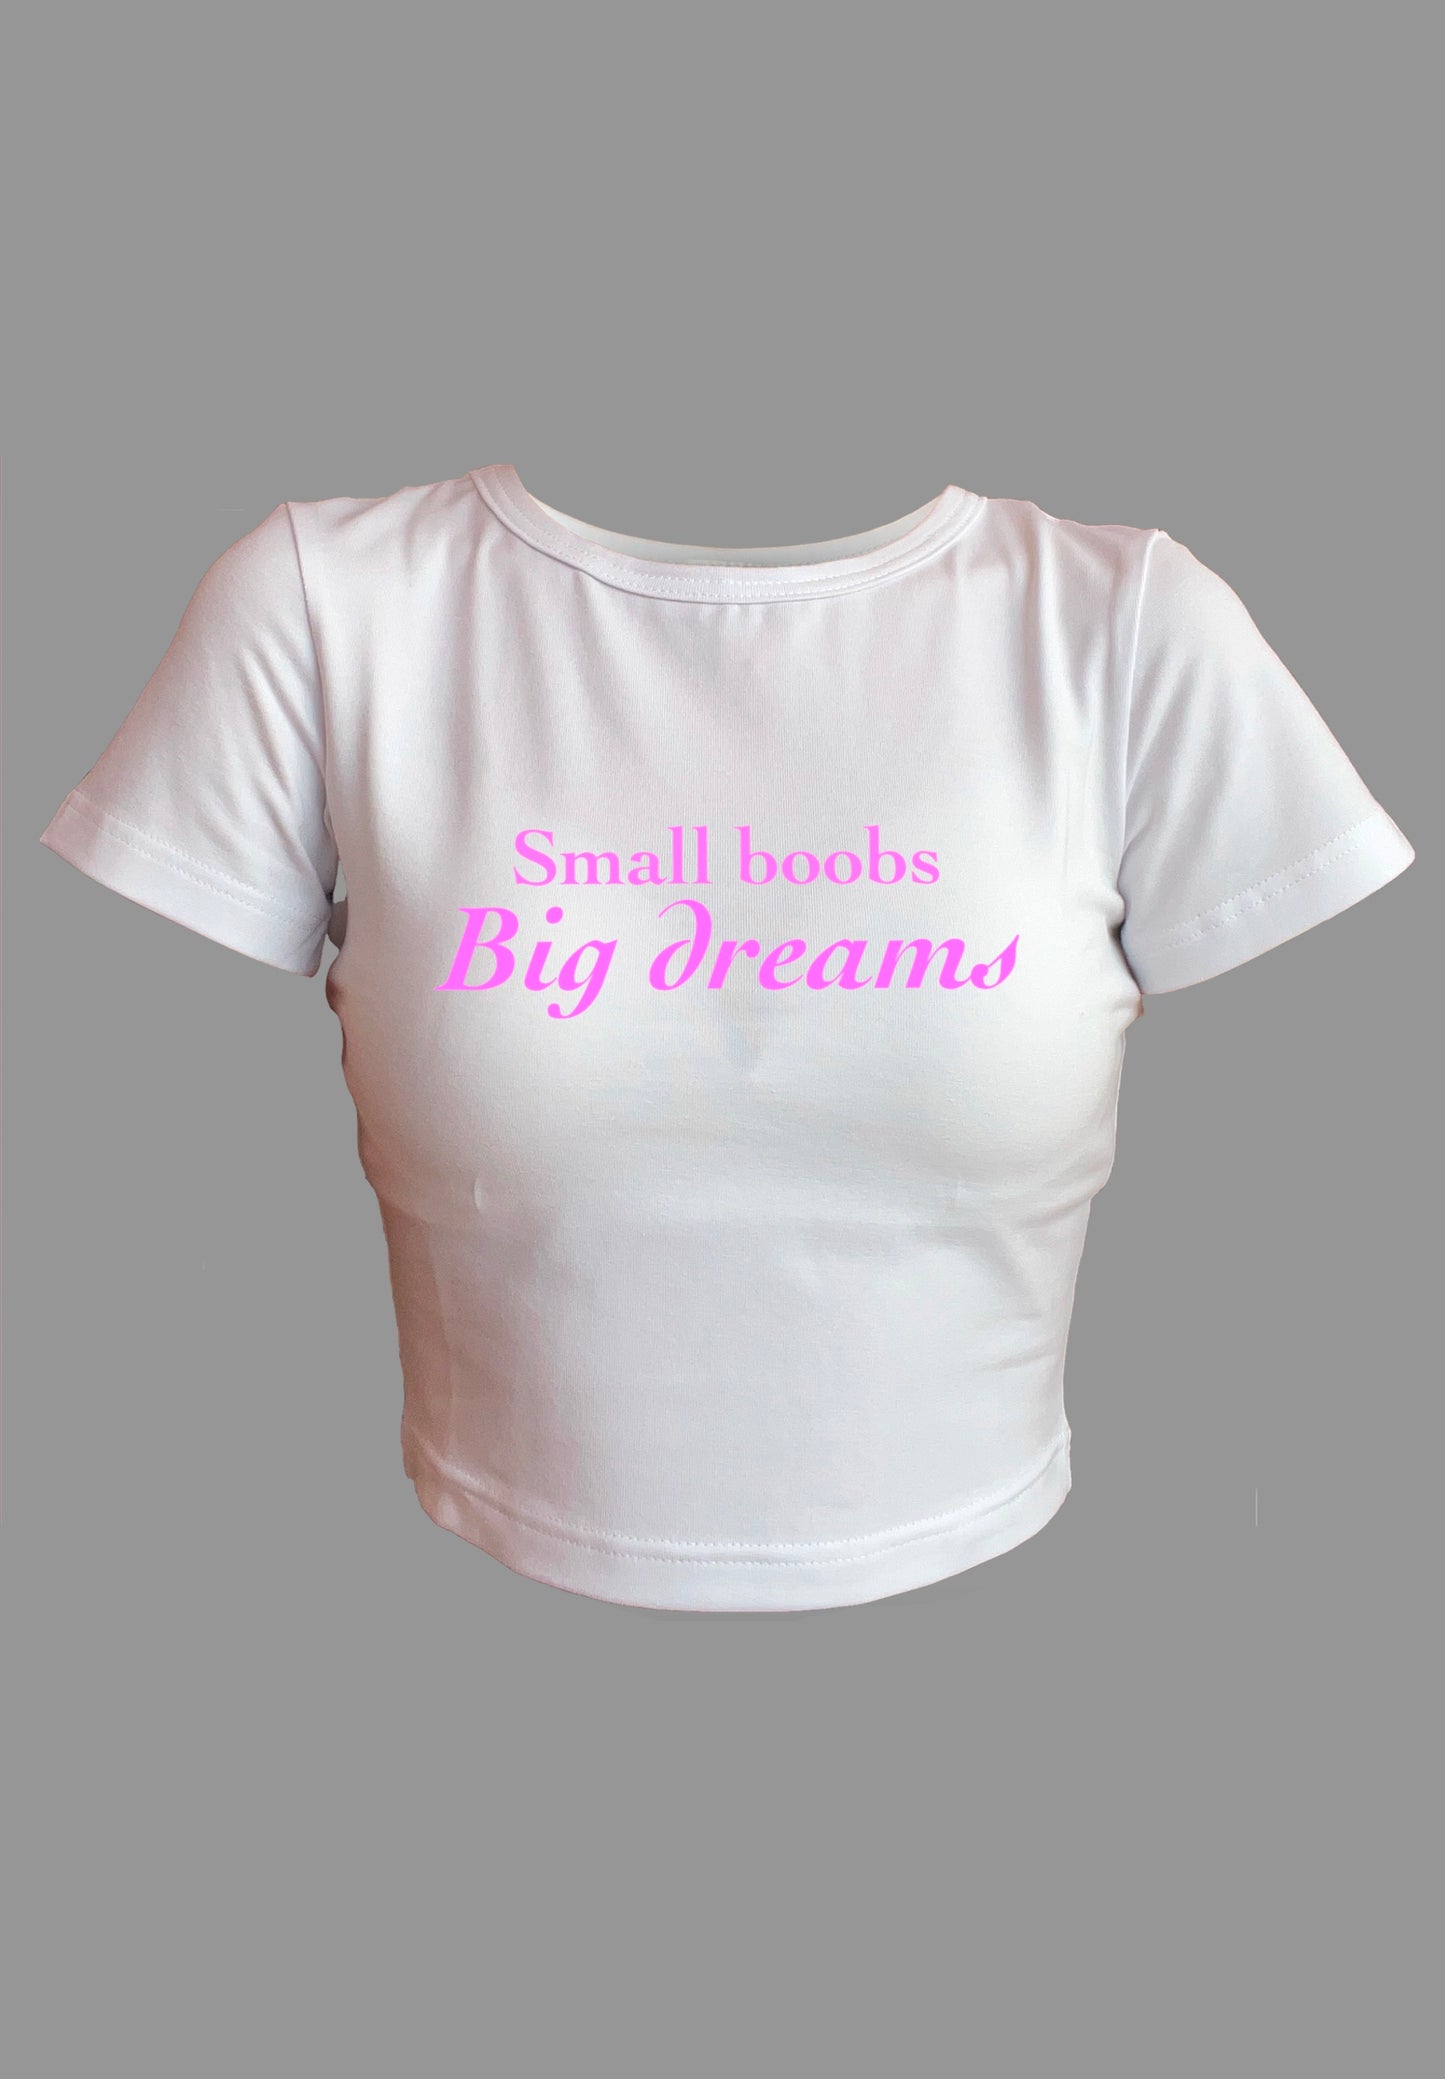 Small Boobs Big Dreams Print Crop Top Adult Humor Fun Flirty Print